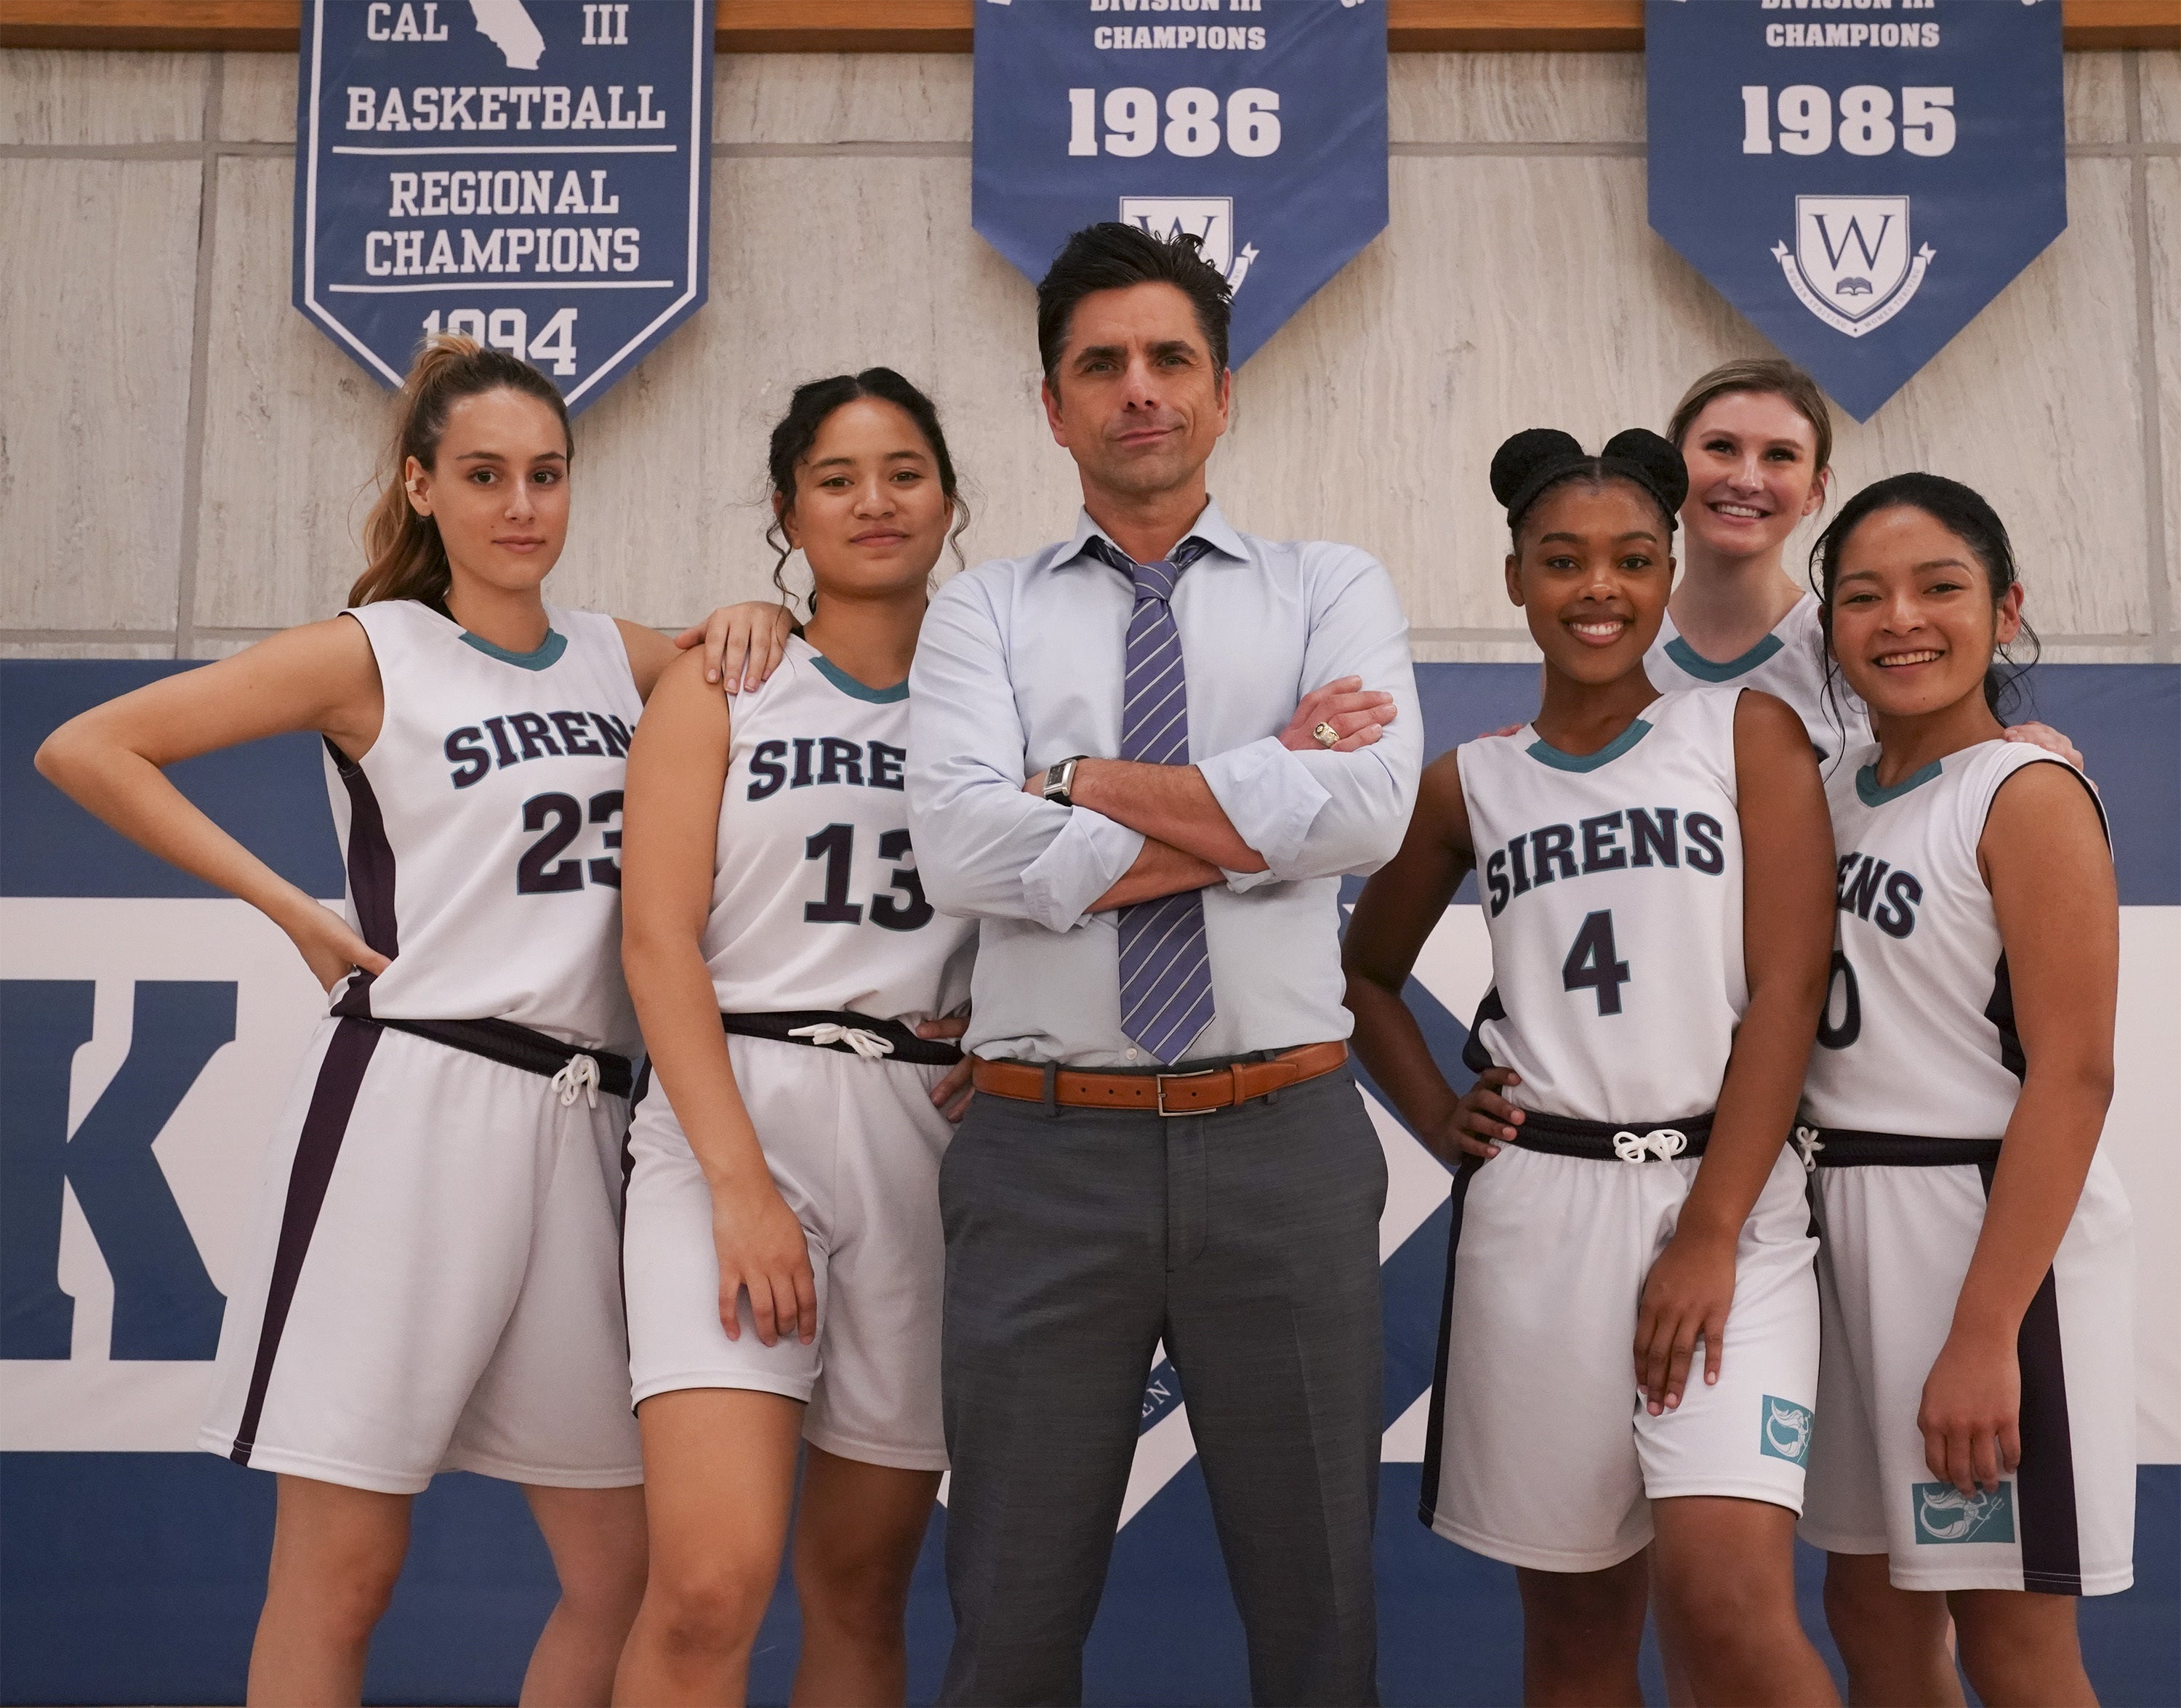 John Stamos with women's basketball team